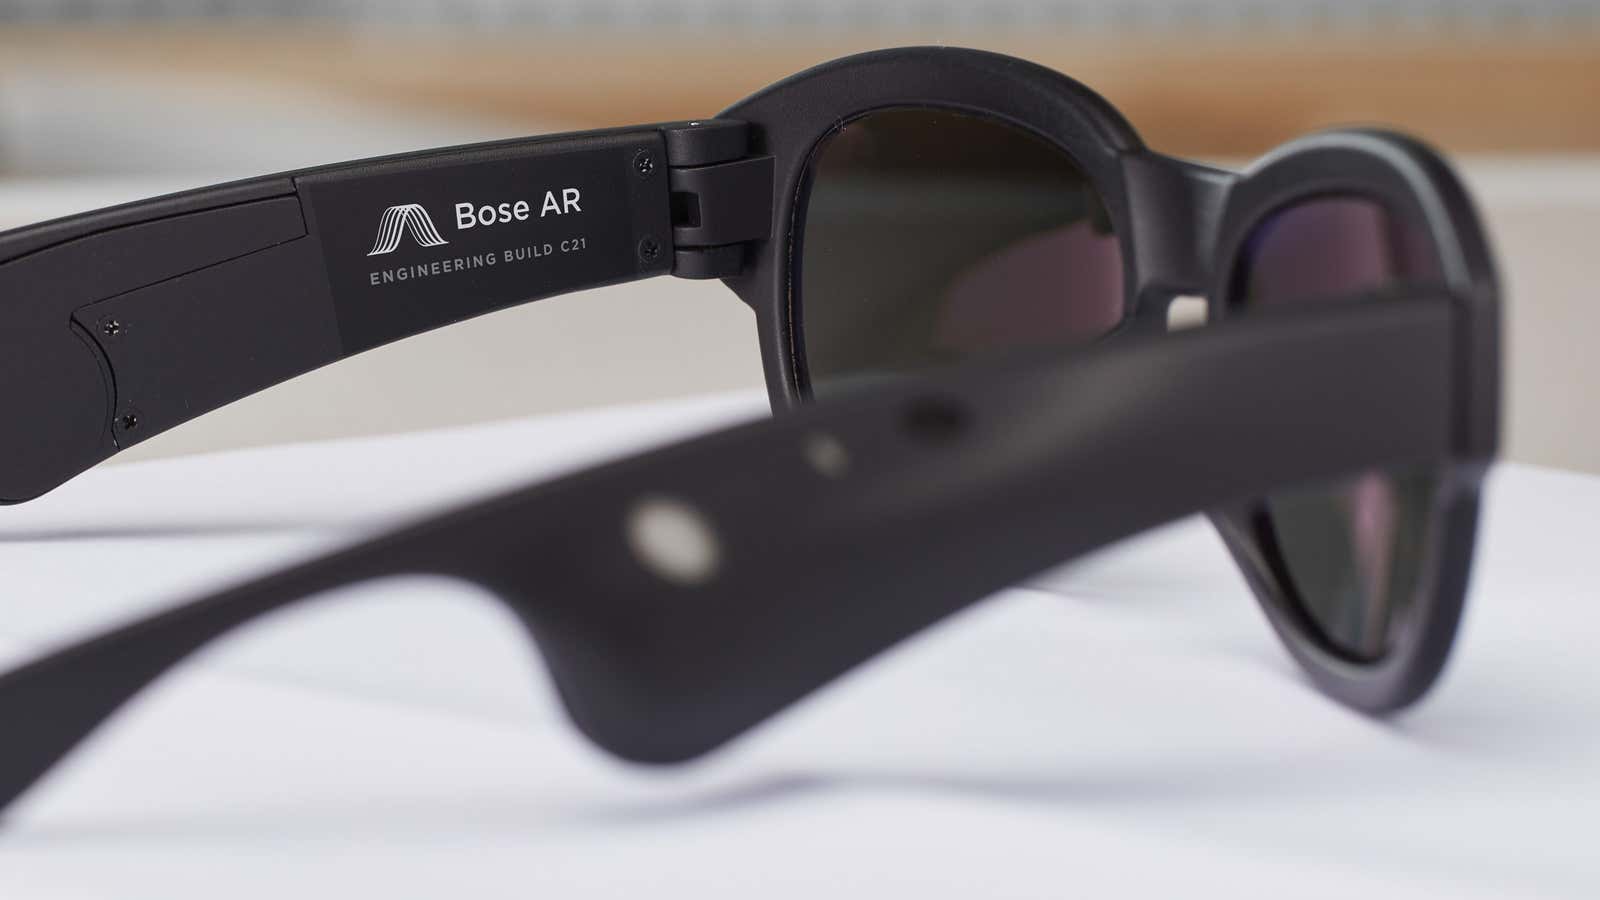 Bose’s prototype glasses.